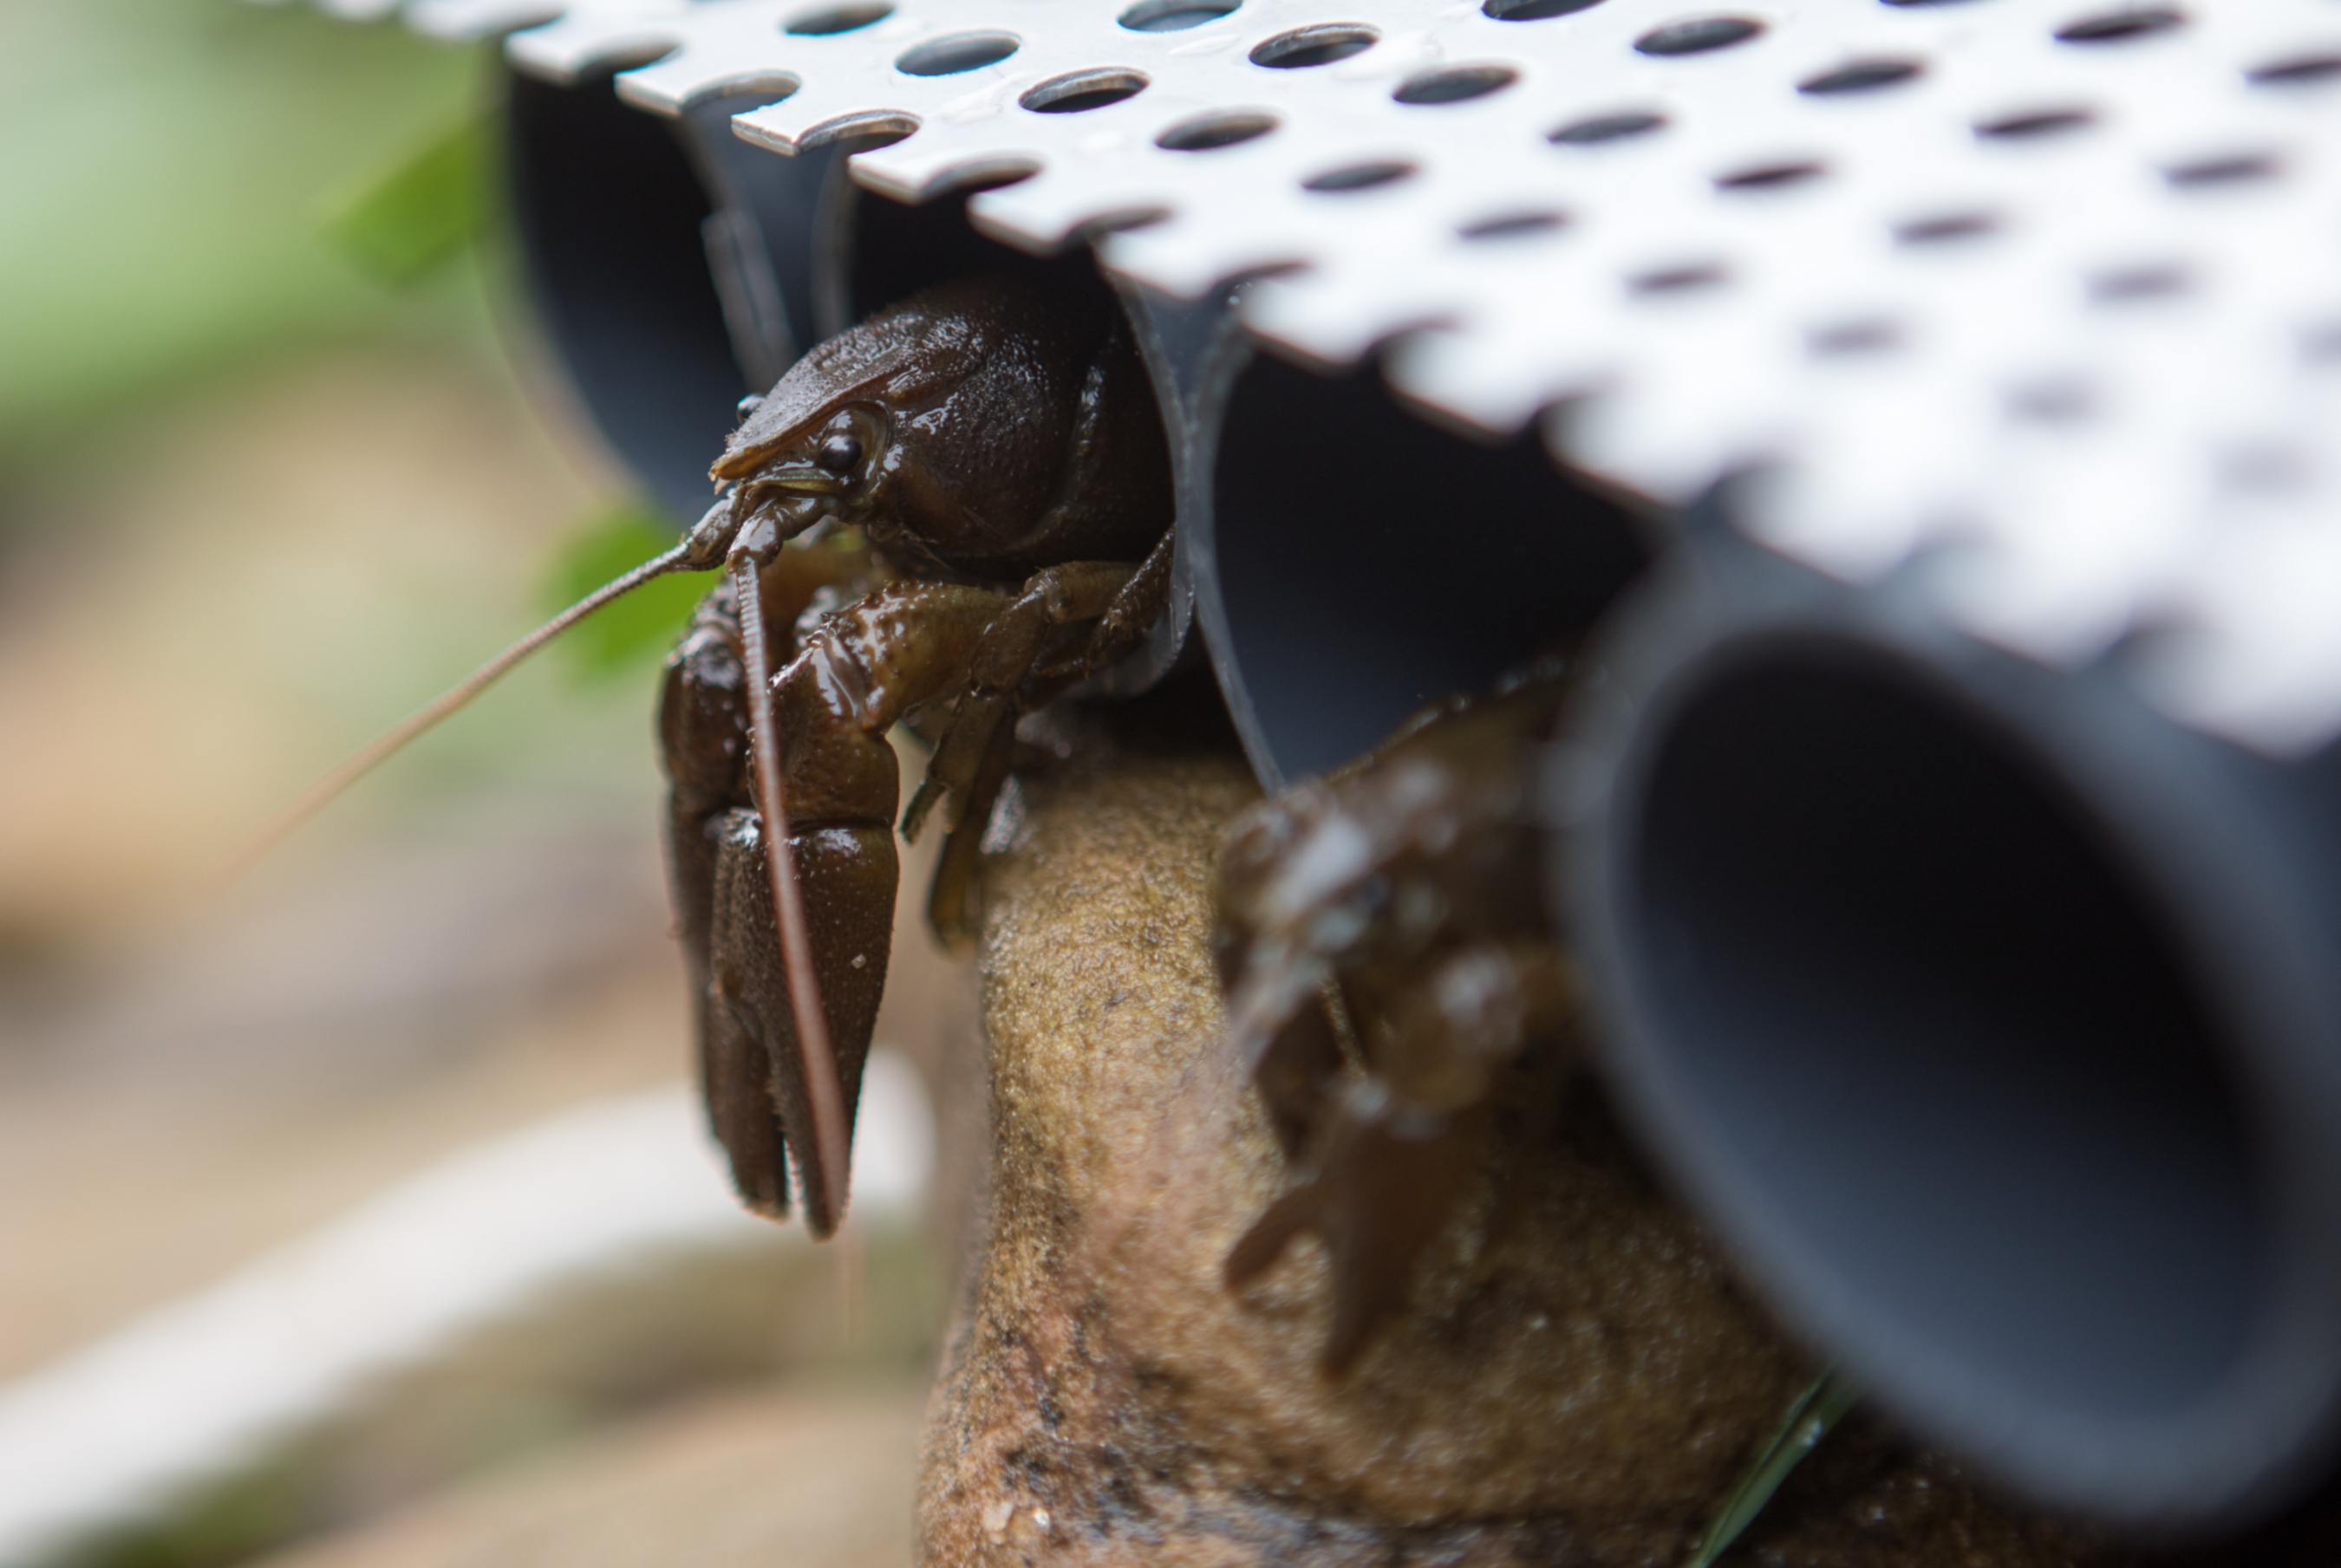 Image 2 - white-clawed native crayfish (photo credit - Sound Ideas & EA)